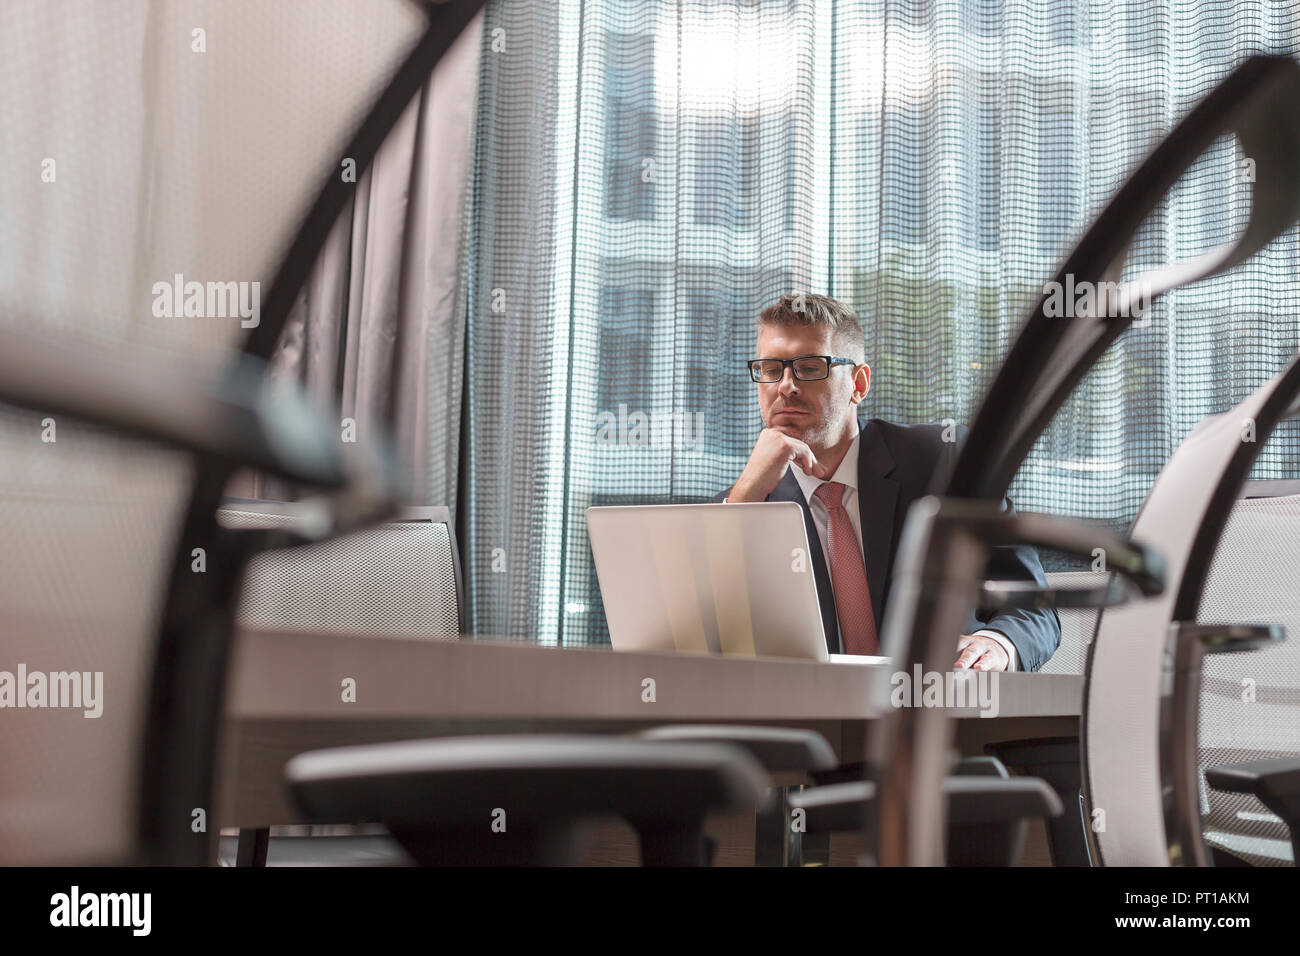 Poland, Warzawa, businessman sitting at conference table dans l''hôtel using laptop Banque D'Images